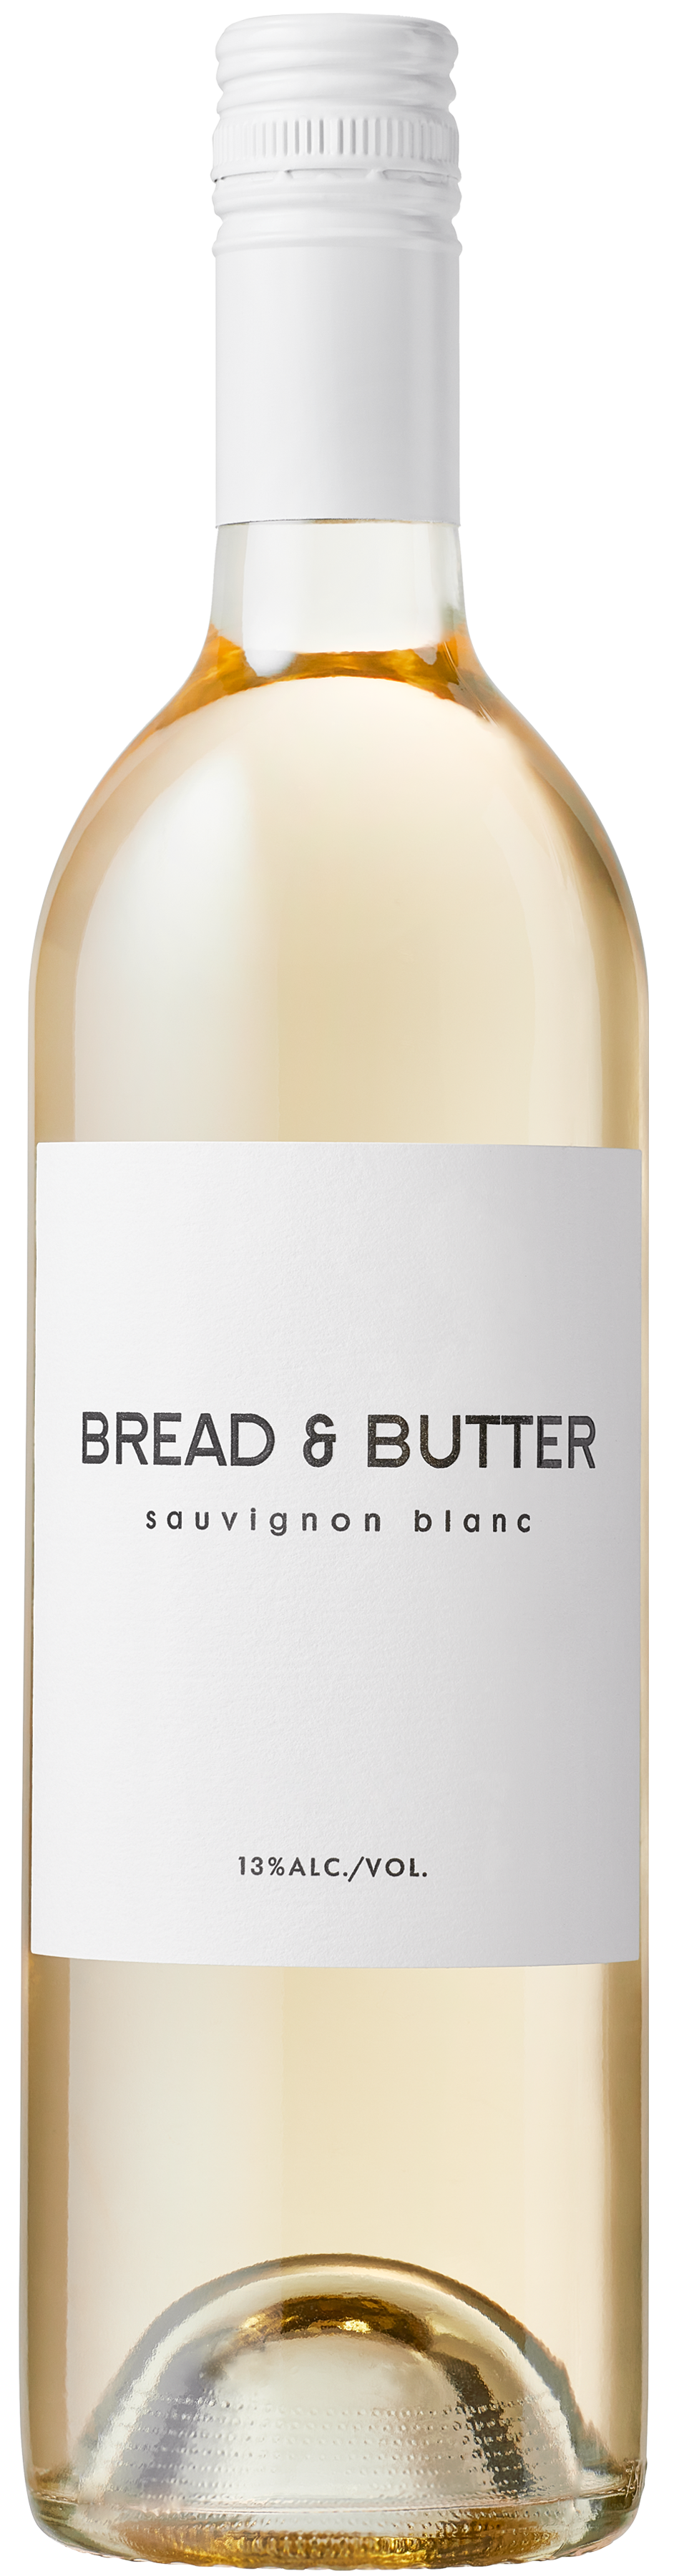 Bread & Butter - WX Trade Portal